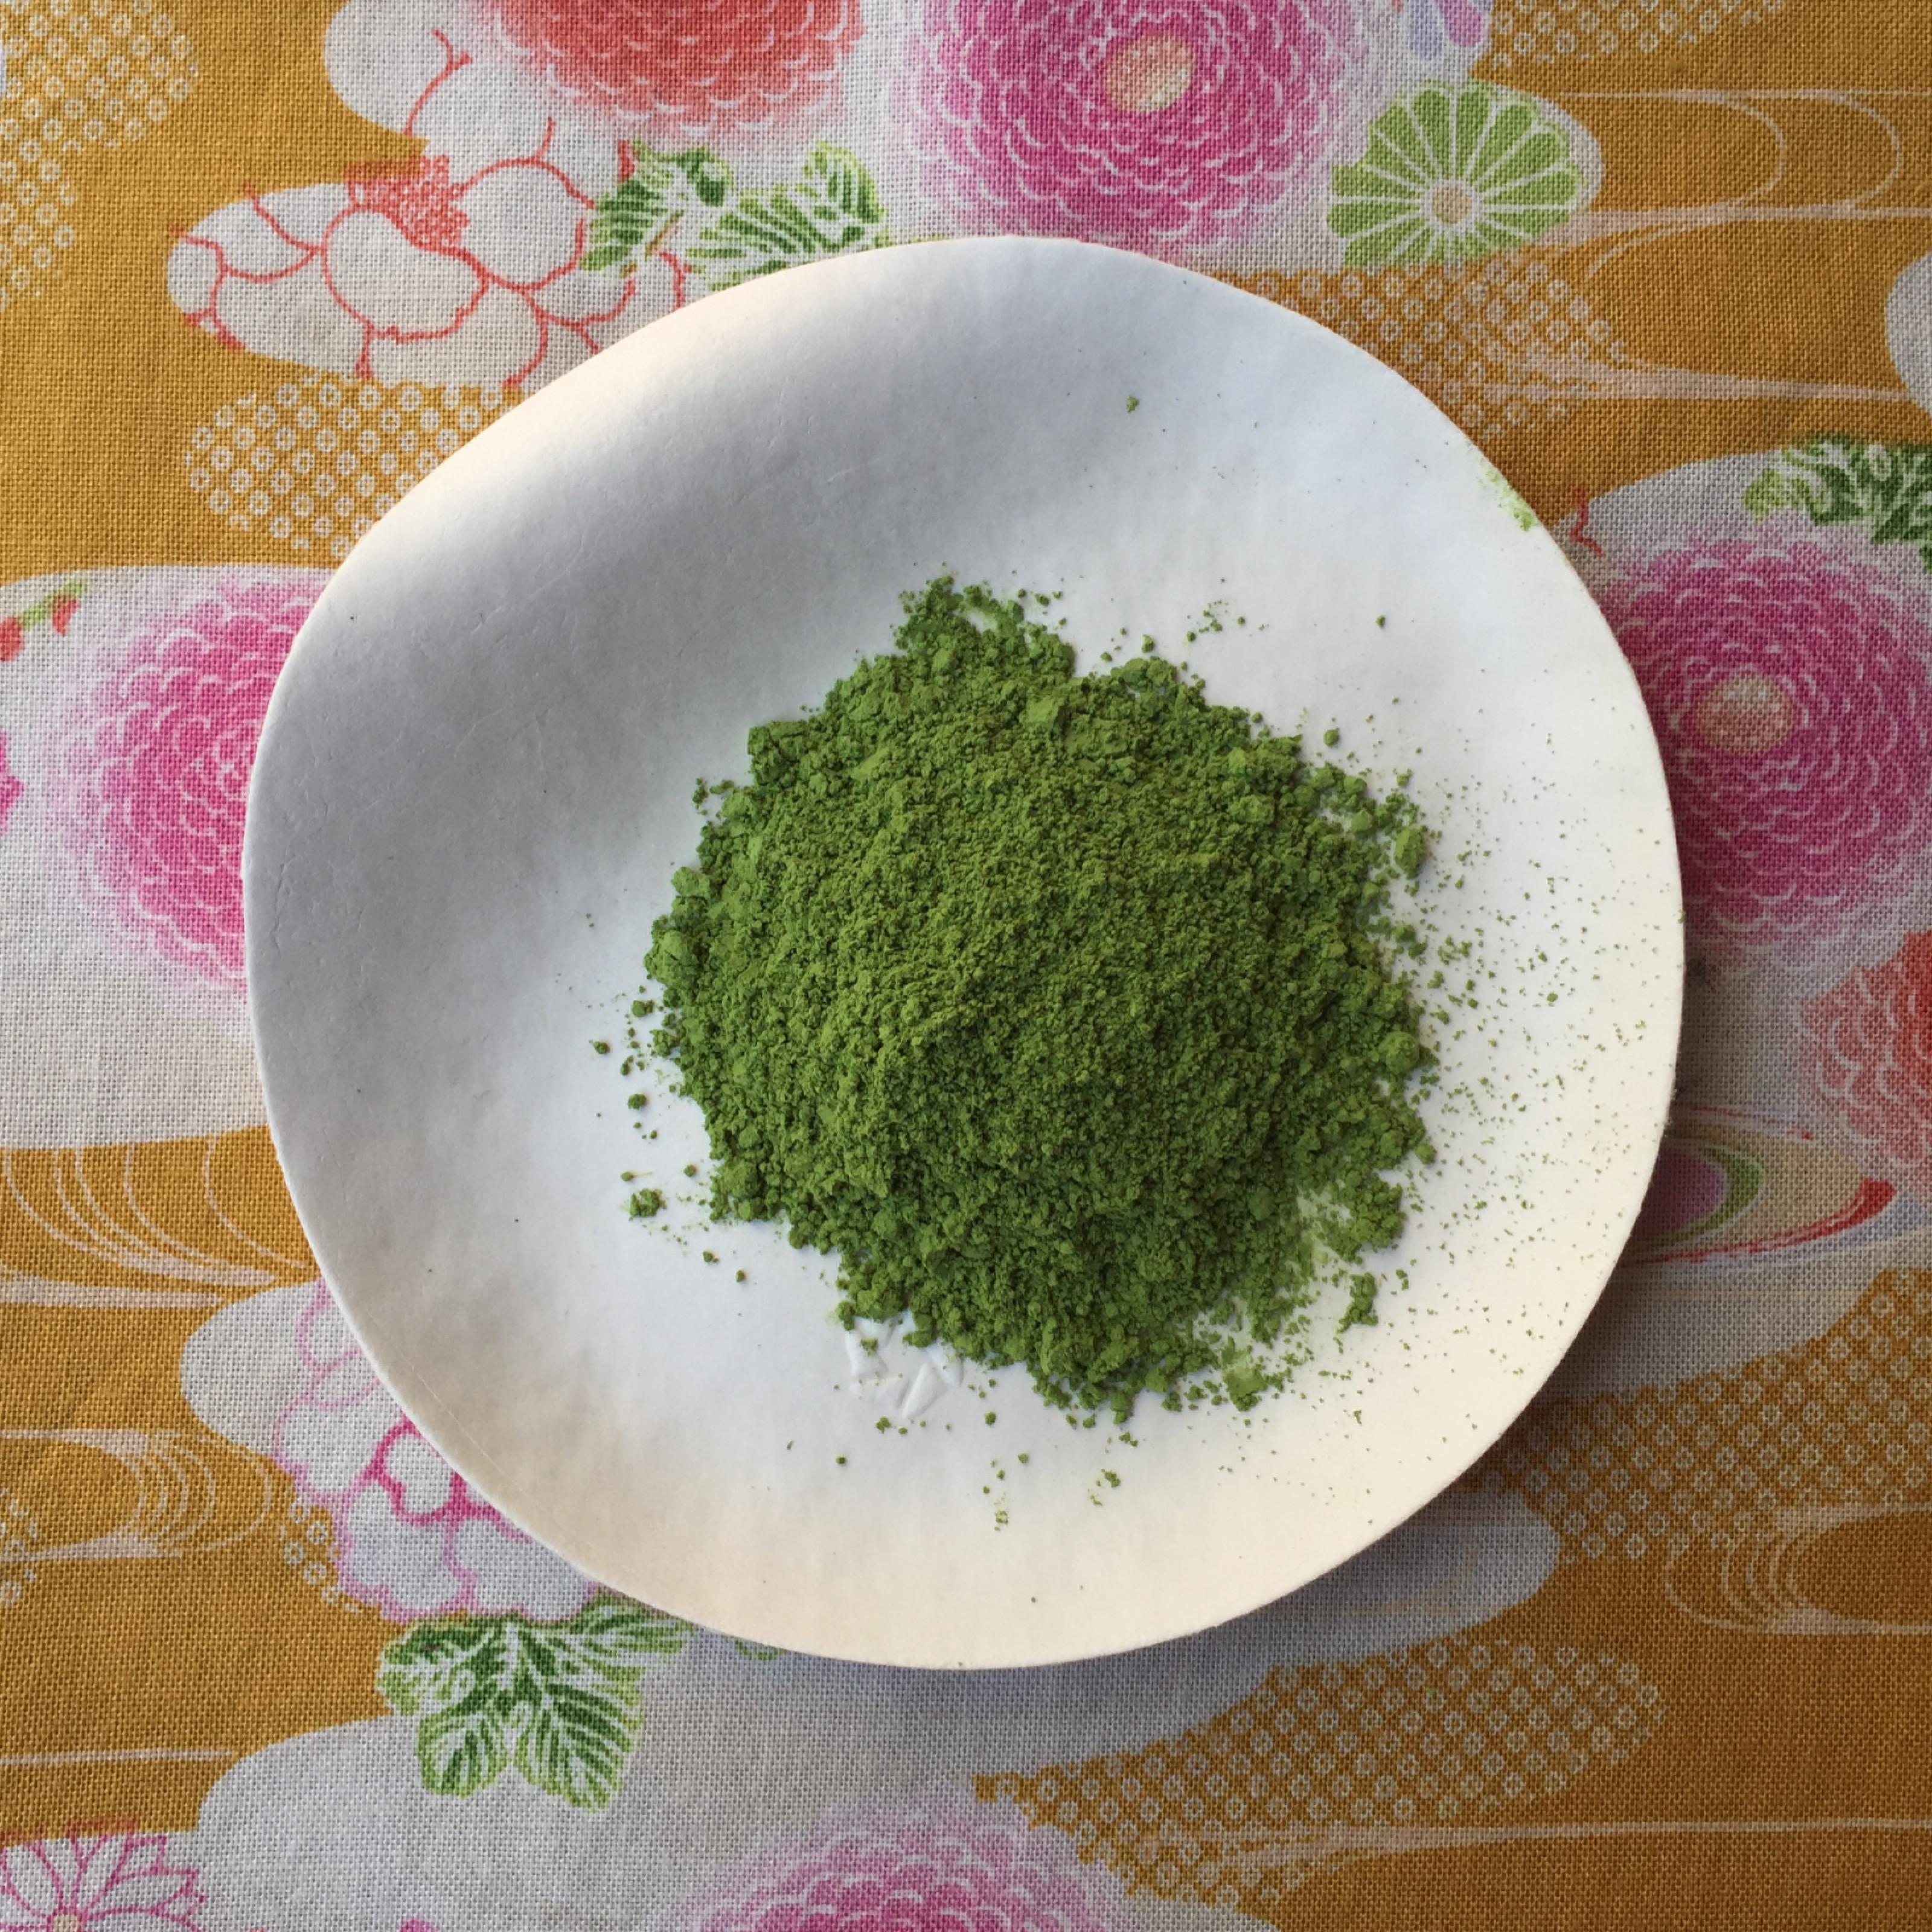 Matcha Bio de Uji : kyusu et yunomi - matcha - thé vert japonais - Nihoncha Paris